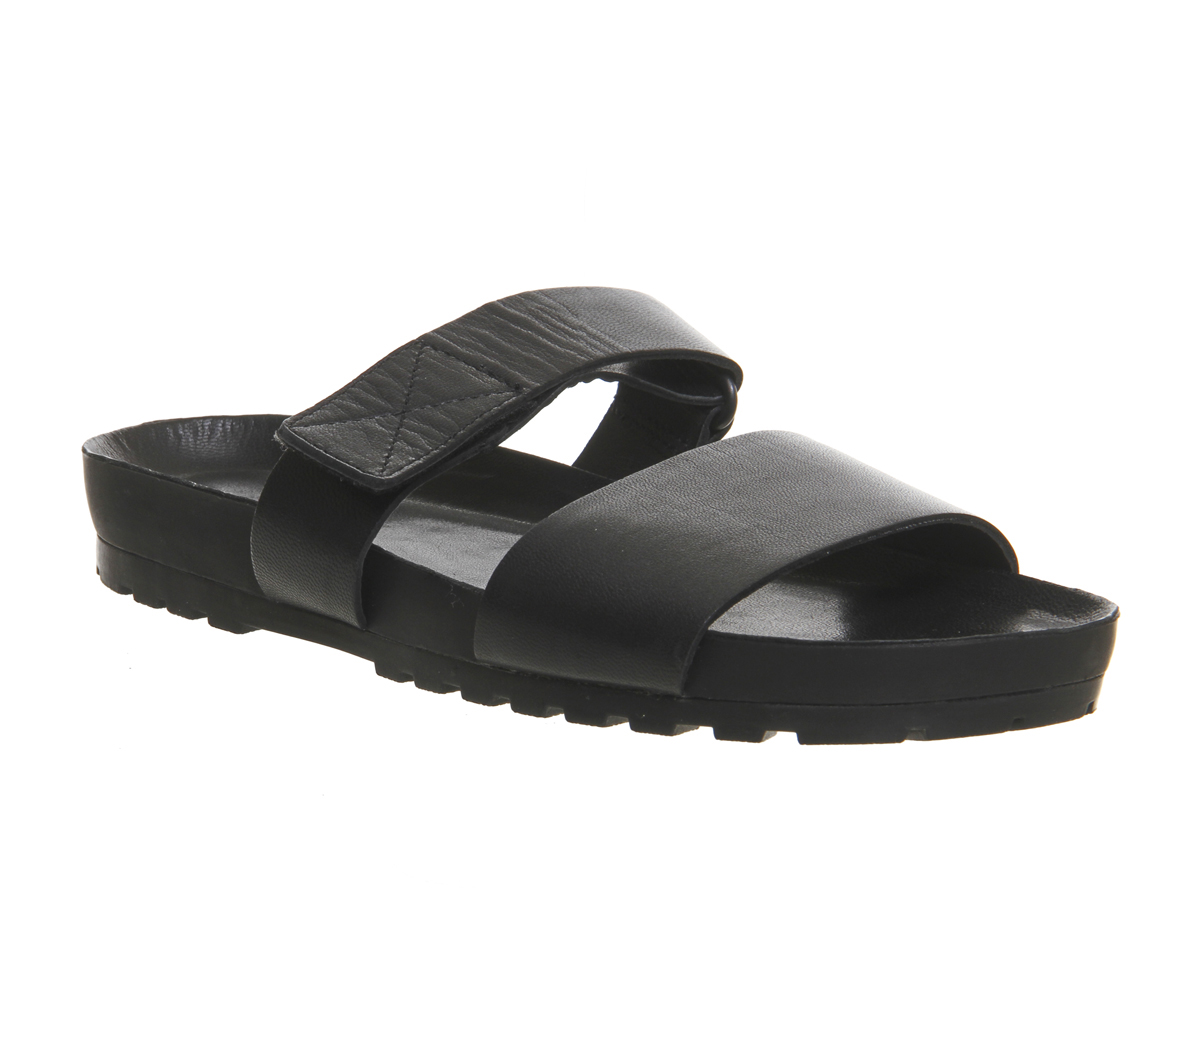 Vagabond Shoemakers Erie Slider Sandal Black Leather - Women’s Sandals